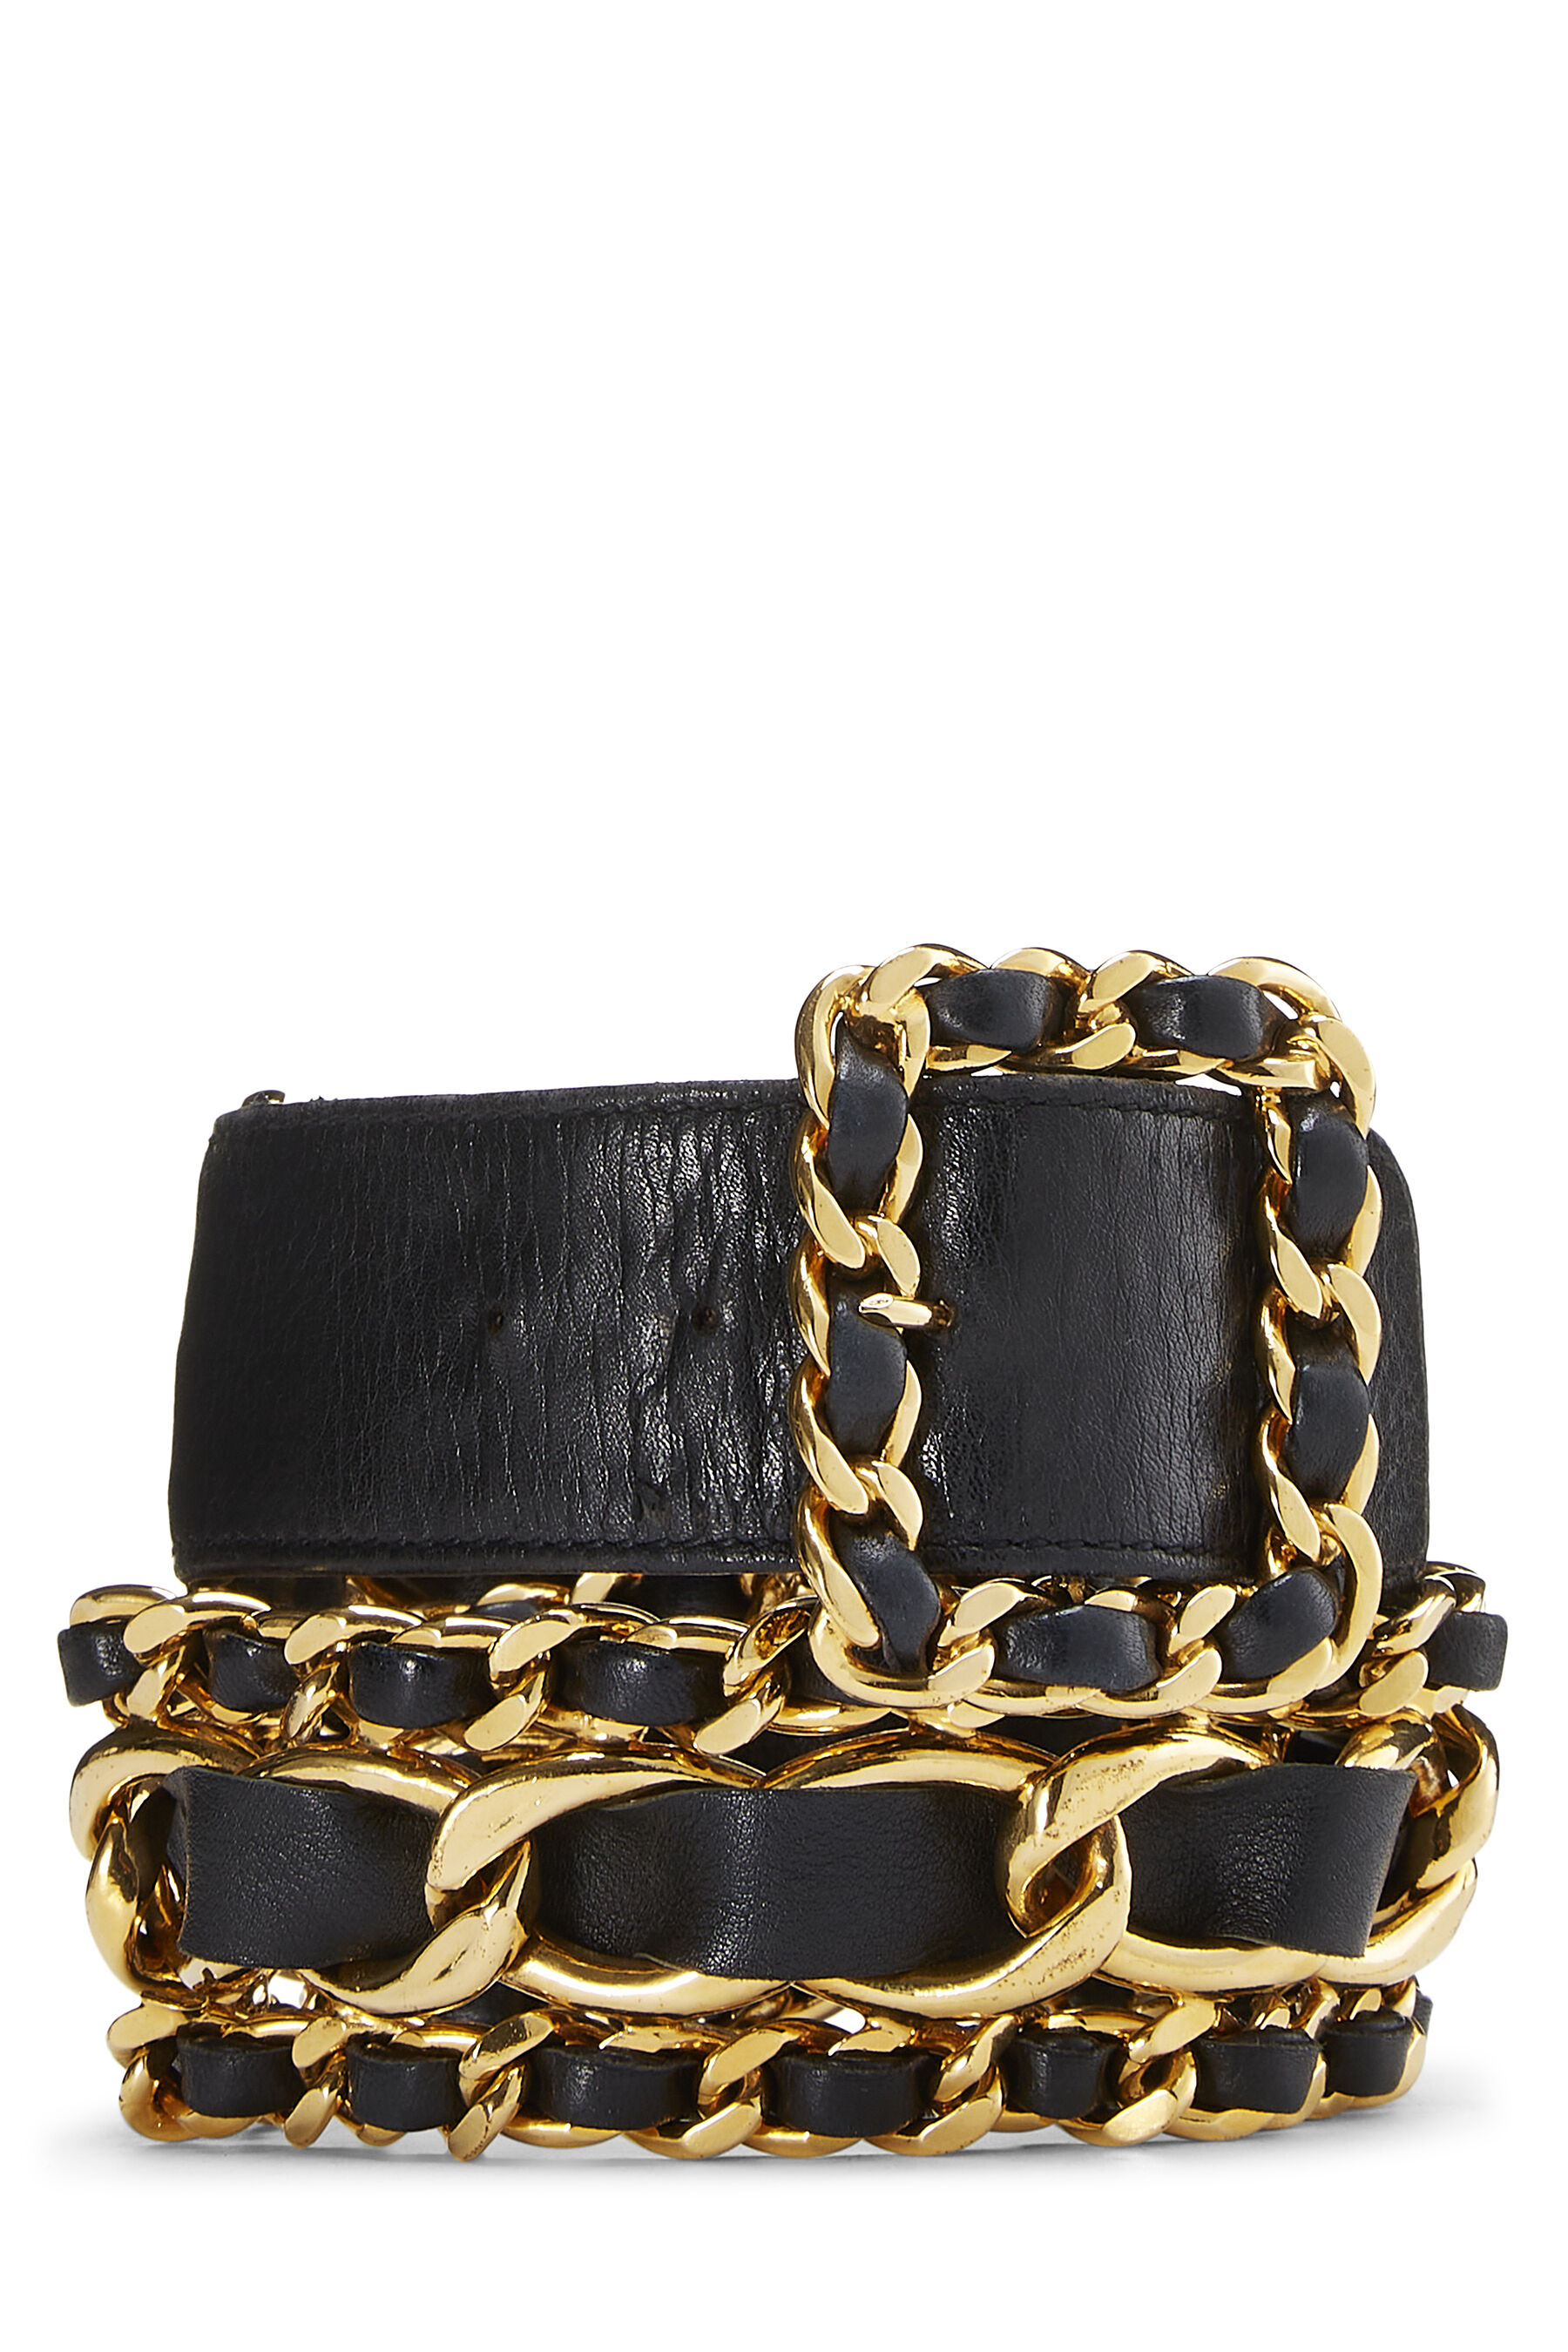 Chanel Black Leather Chain Belt